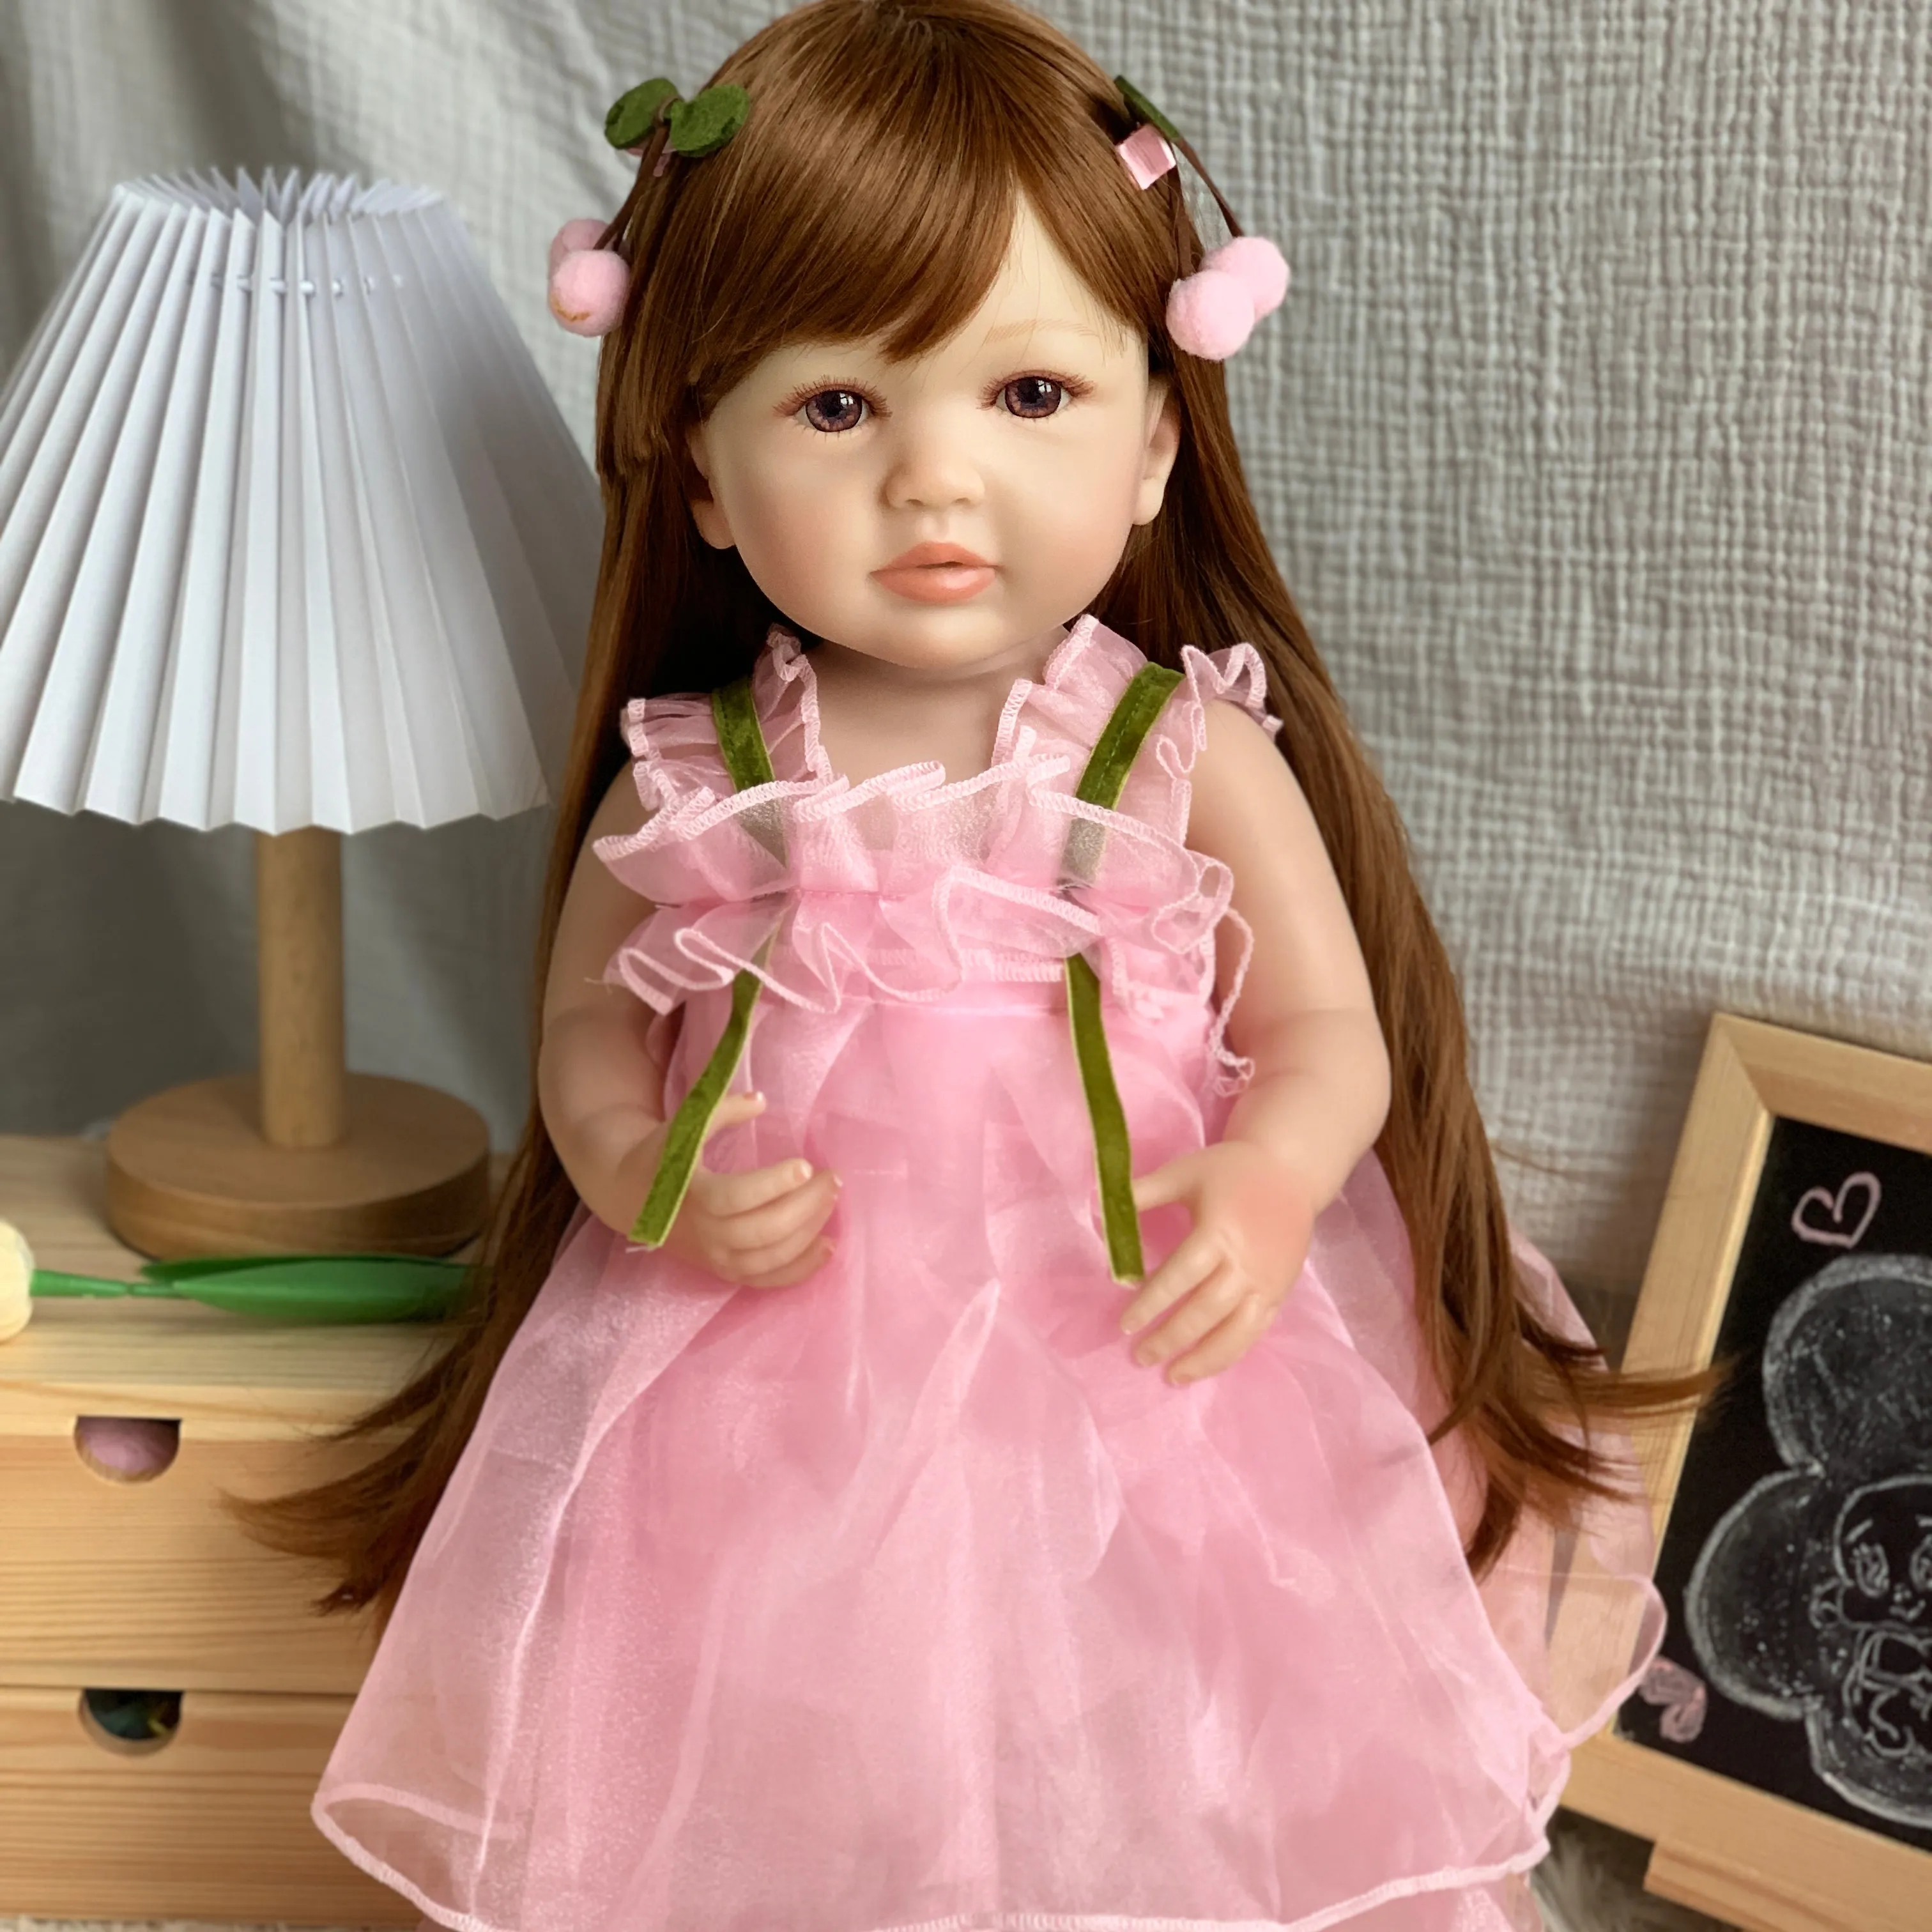 R&B atacado modelo de brinquedo Loli para meninas roupas e venda marrom feito na China para beber xixi de silicone bonecas reborn